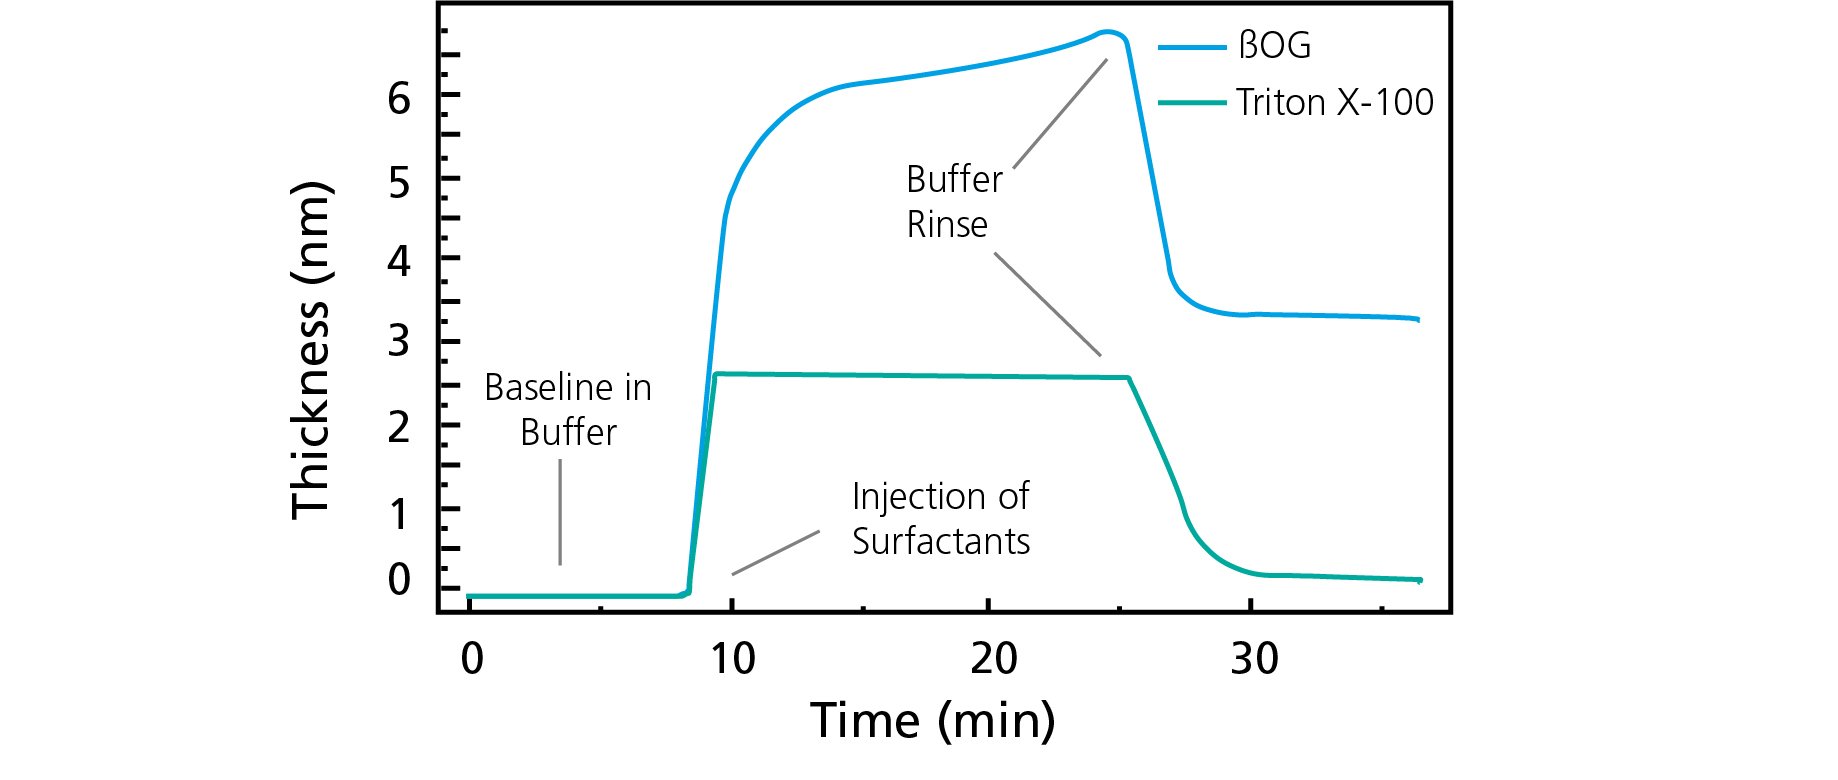 Surfactant adsorption Triton X-100 vs BOG